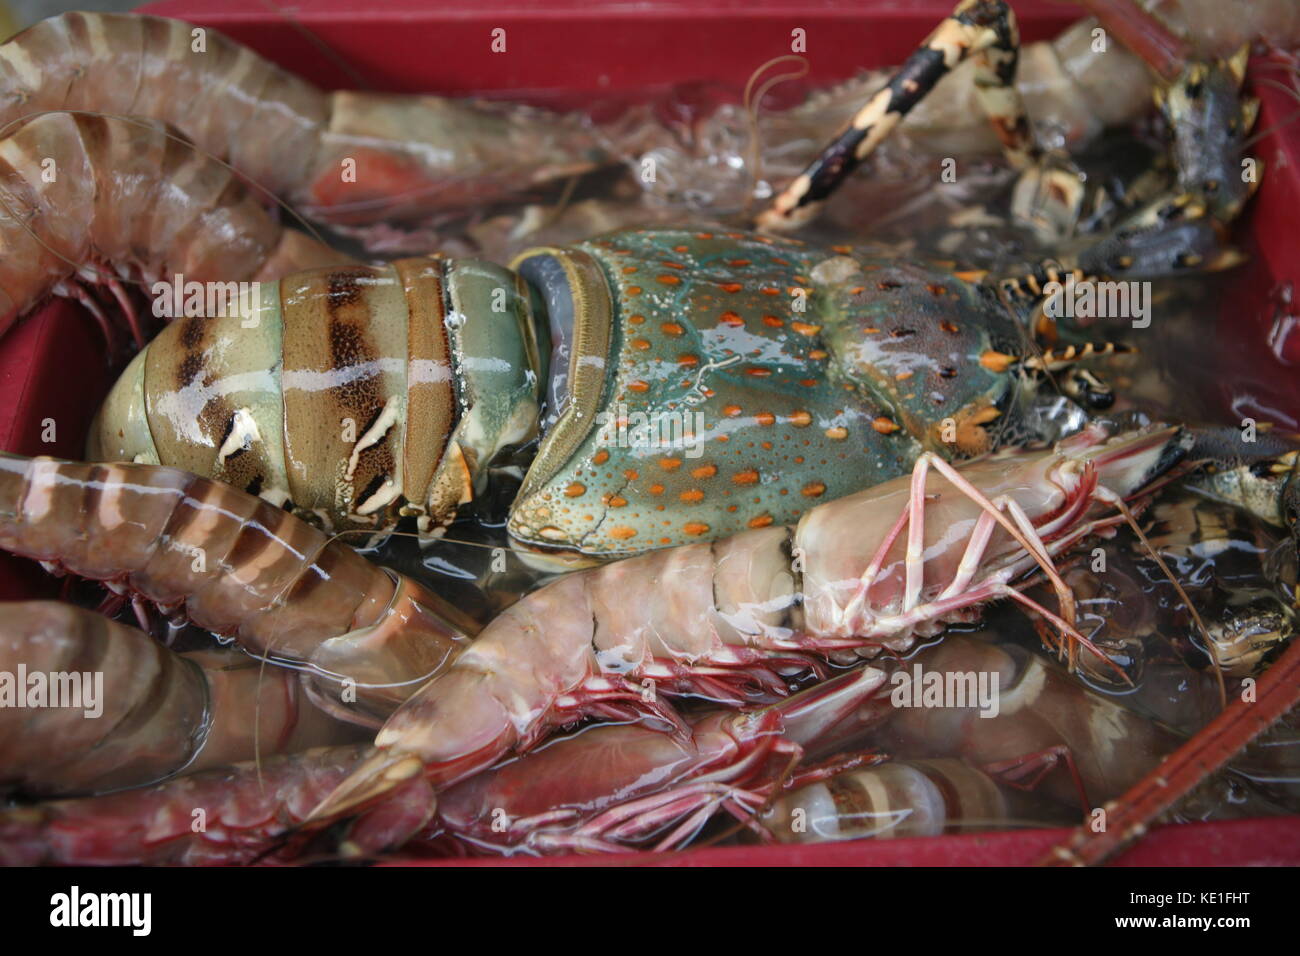 Hummer und Garnelen roh auf Fischmarkt - aragosta e gamberi crudi sul mercato del pesce Foto Stock